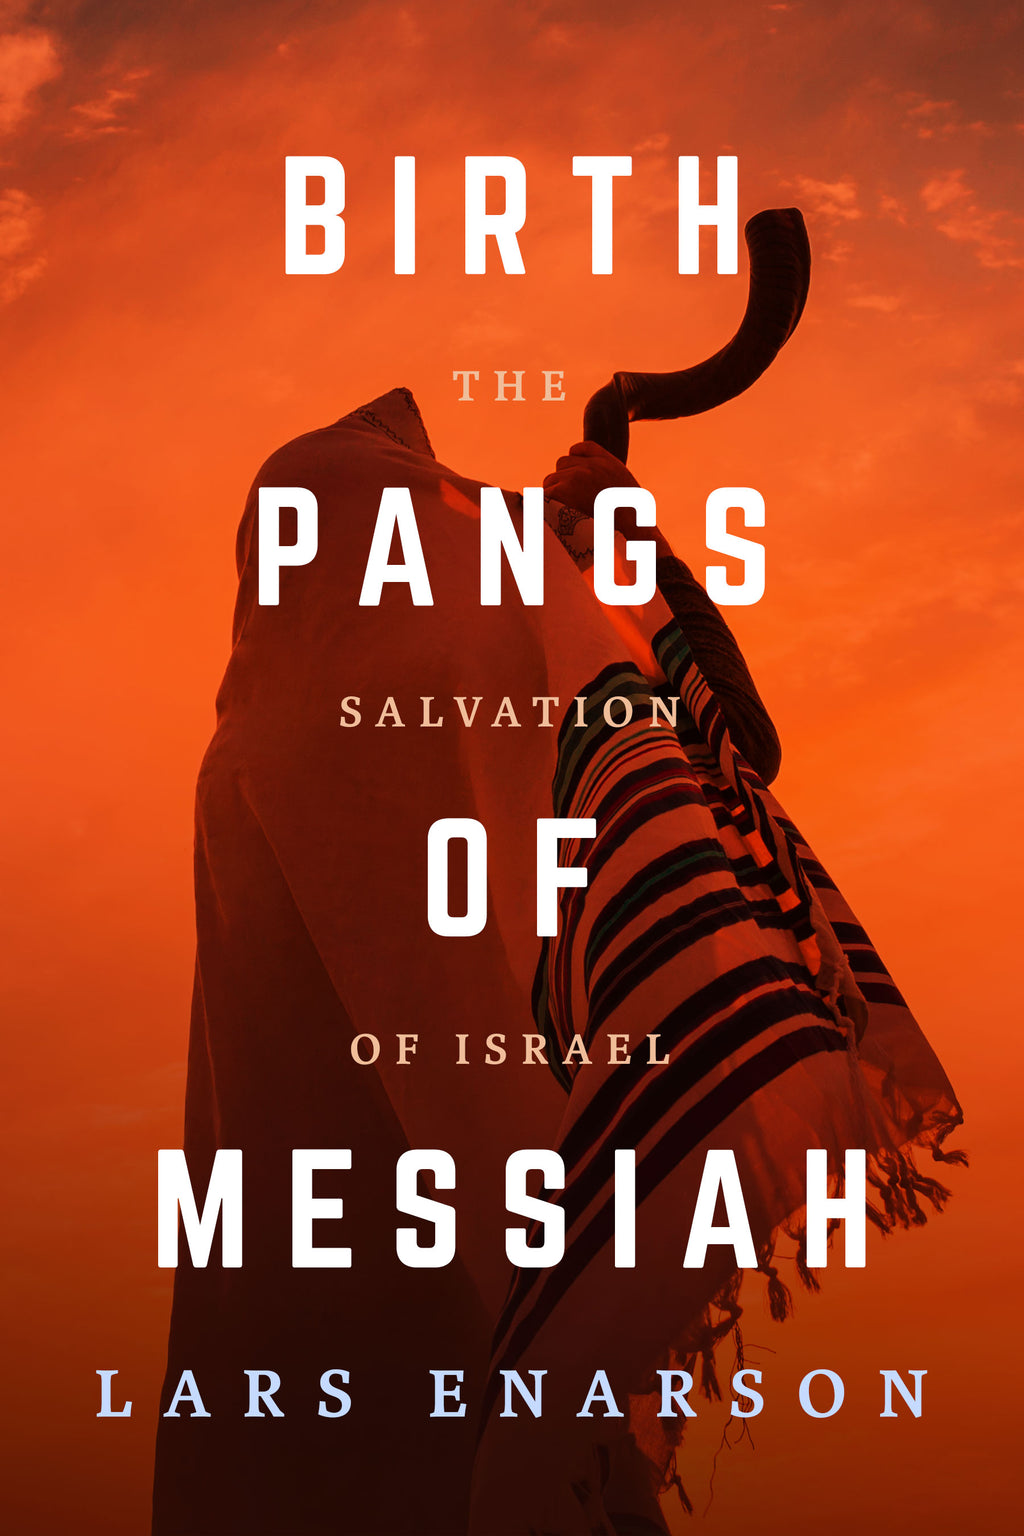 [BACKORDER] Birth Pangs of Messiah: The Salvation of Israel - Lars Enarson